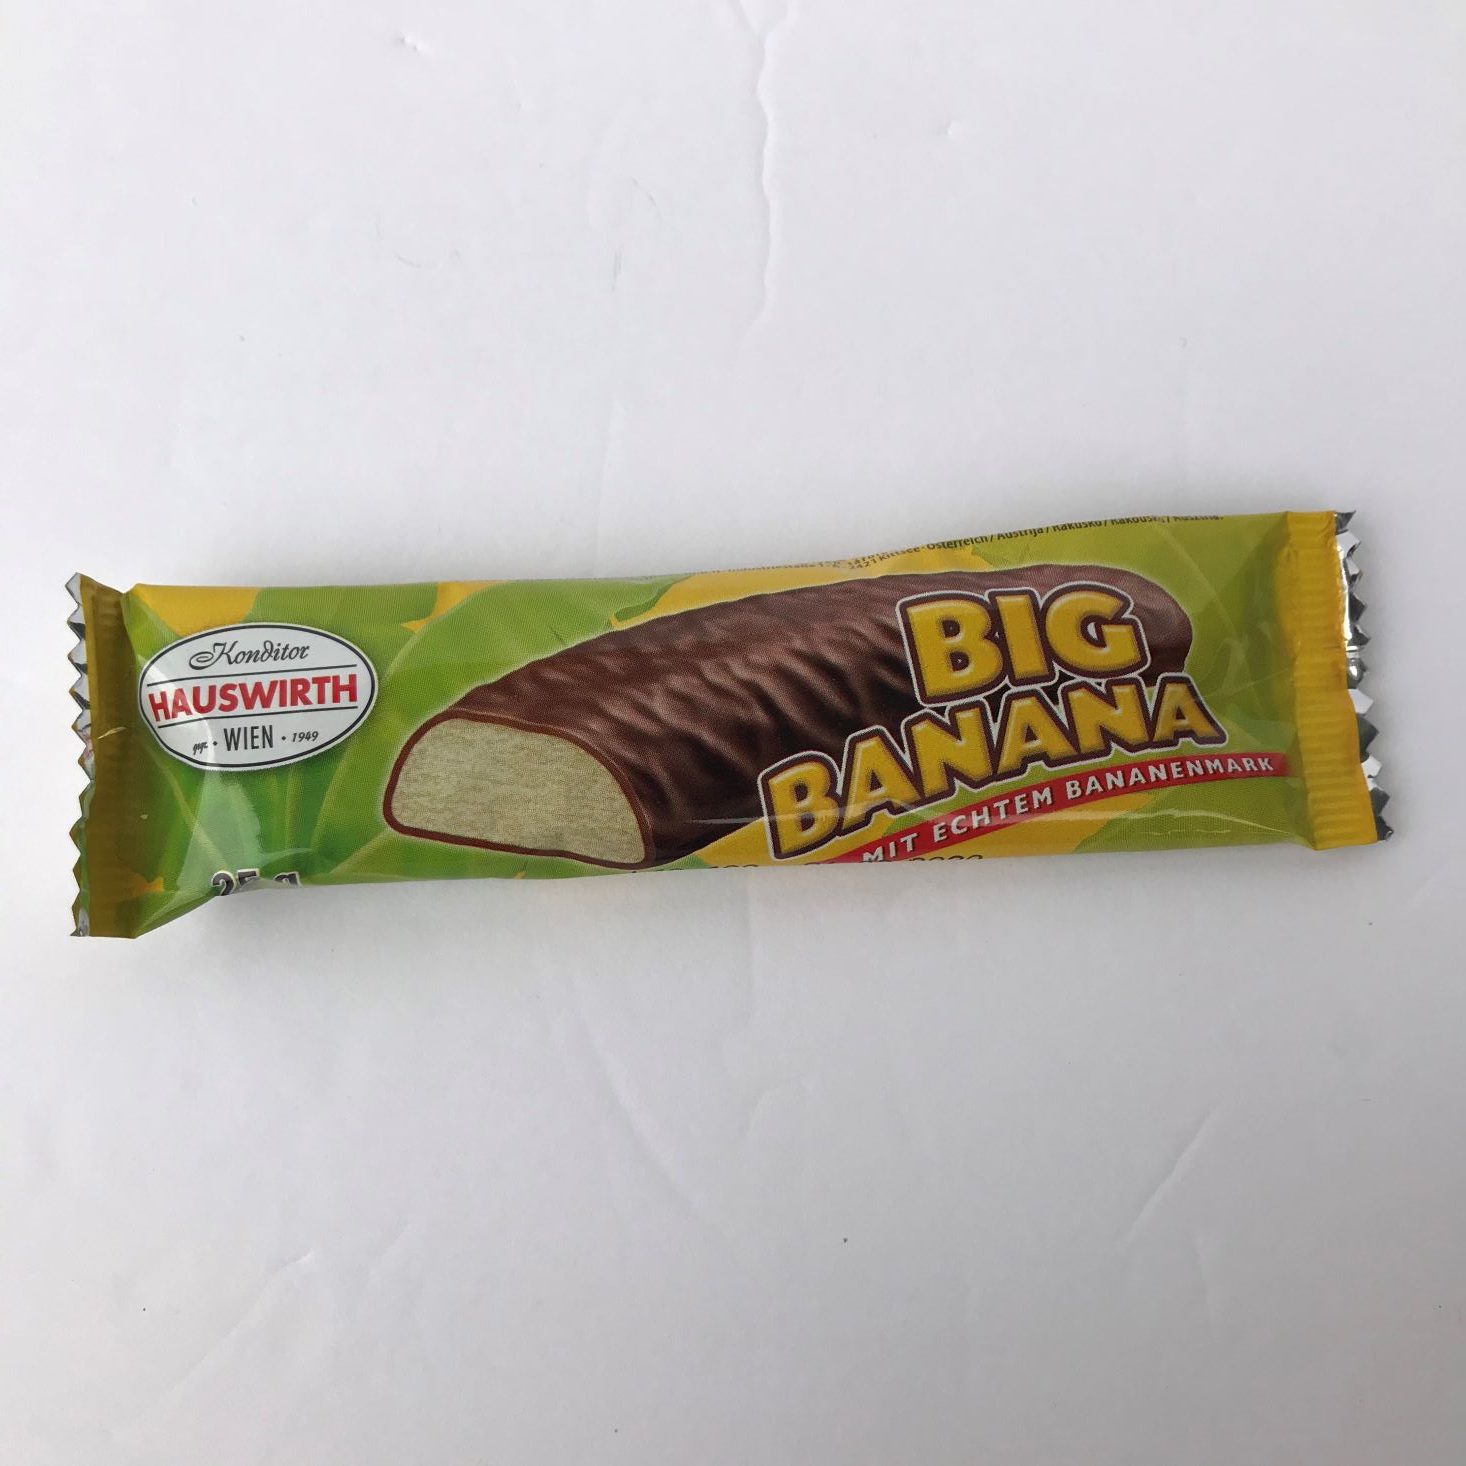 Universal Yums Oct 2019 big banana unopened